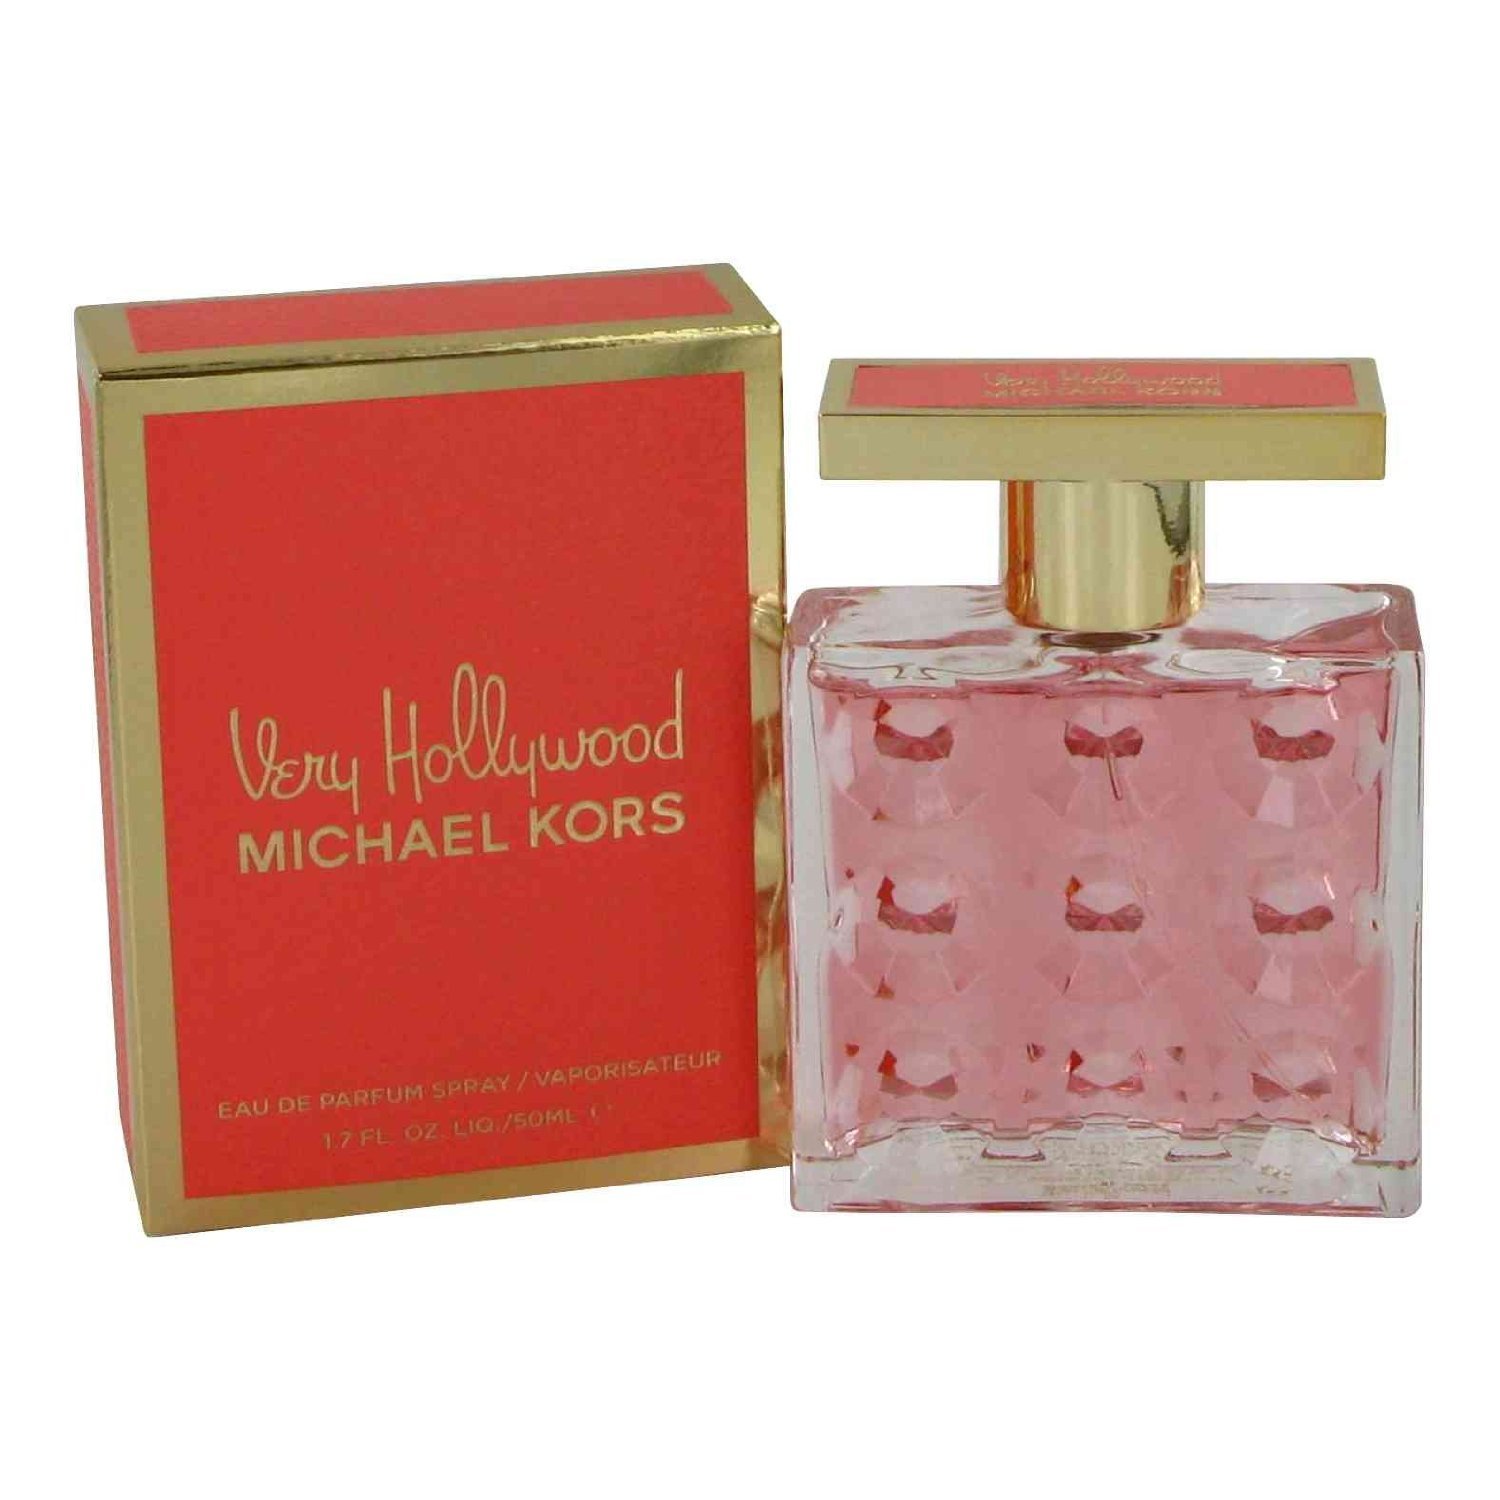 Michael Kors perfume for women - Very Hollywood Michael Kors for women 